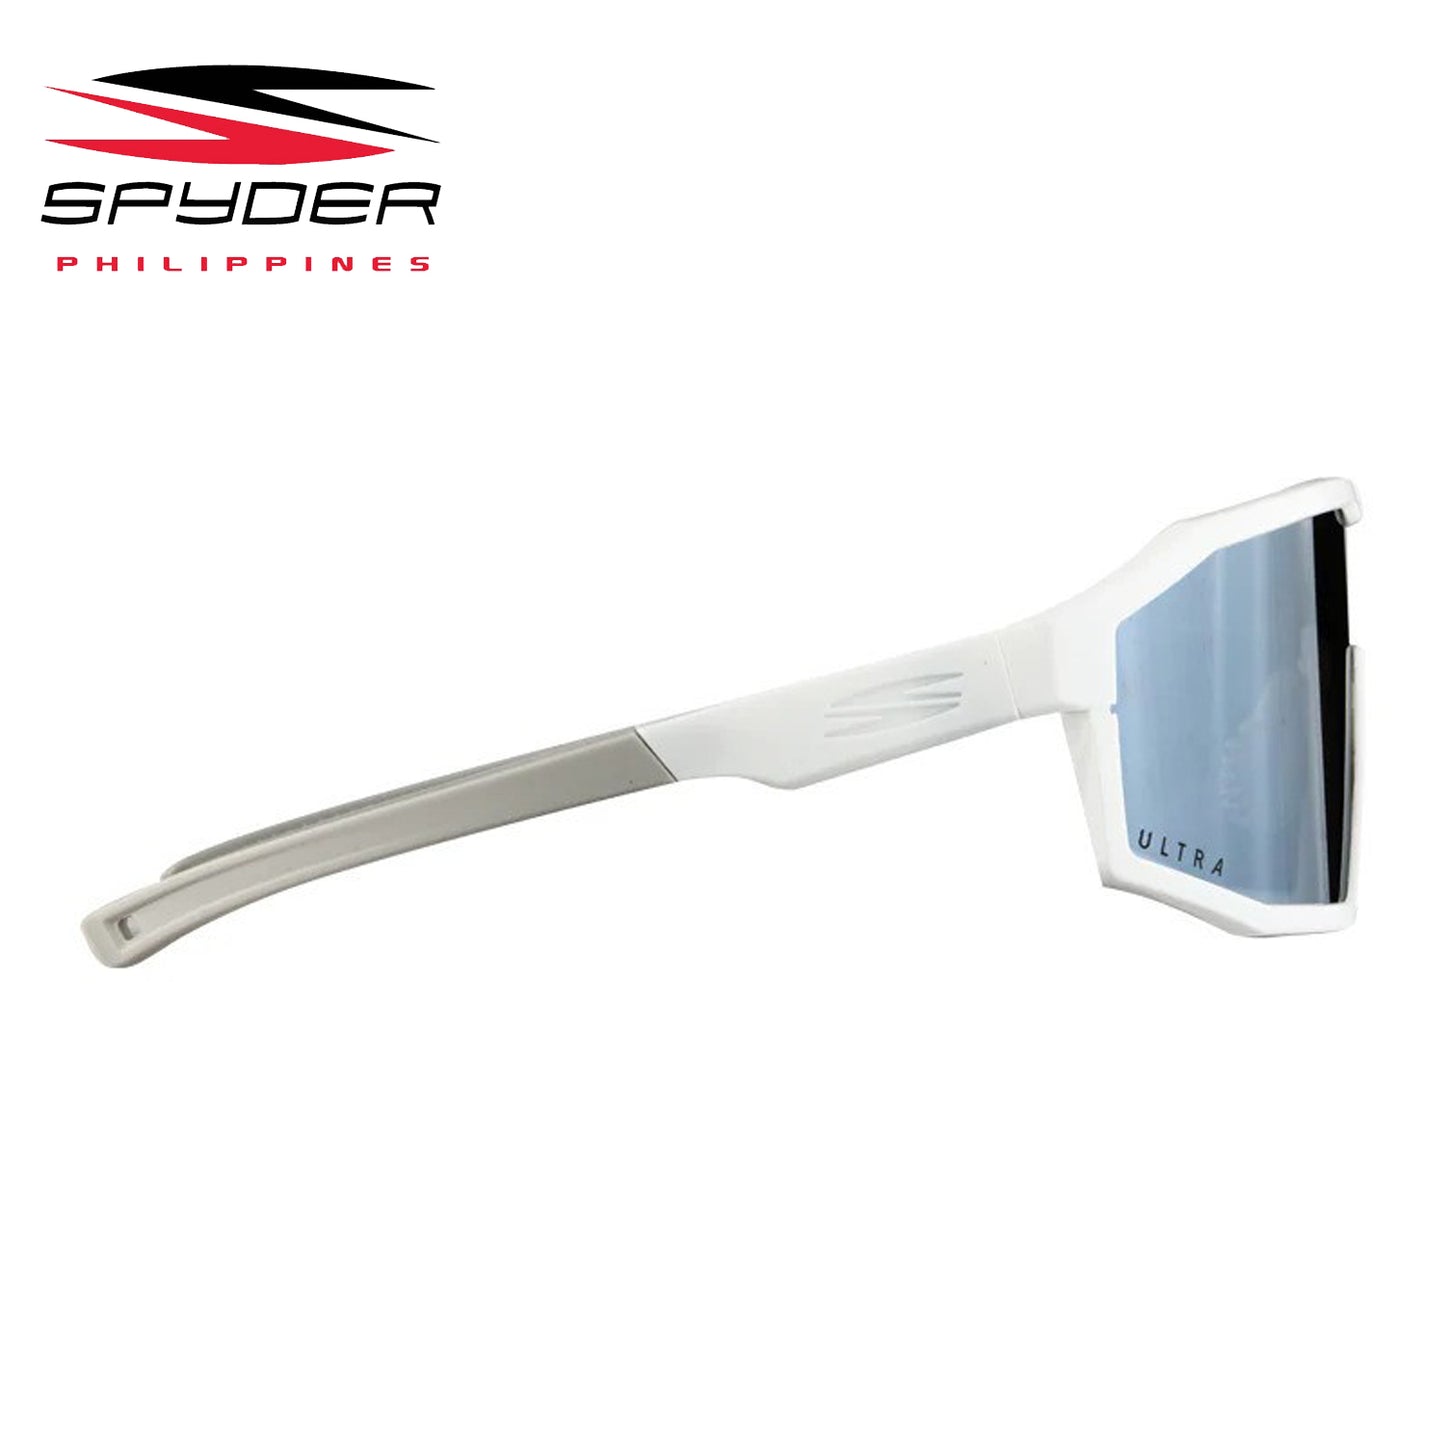 Spyder Craft (PC) Polycarbonate Performance Eyewear - 9S010 Shiny White